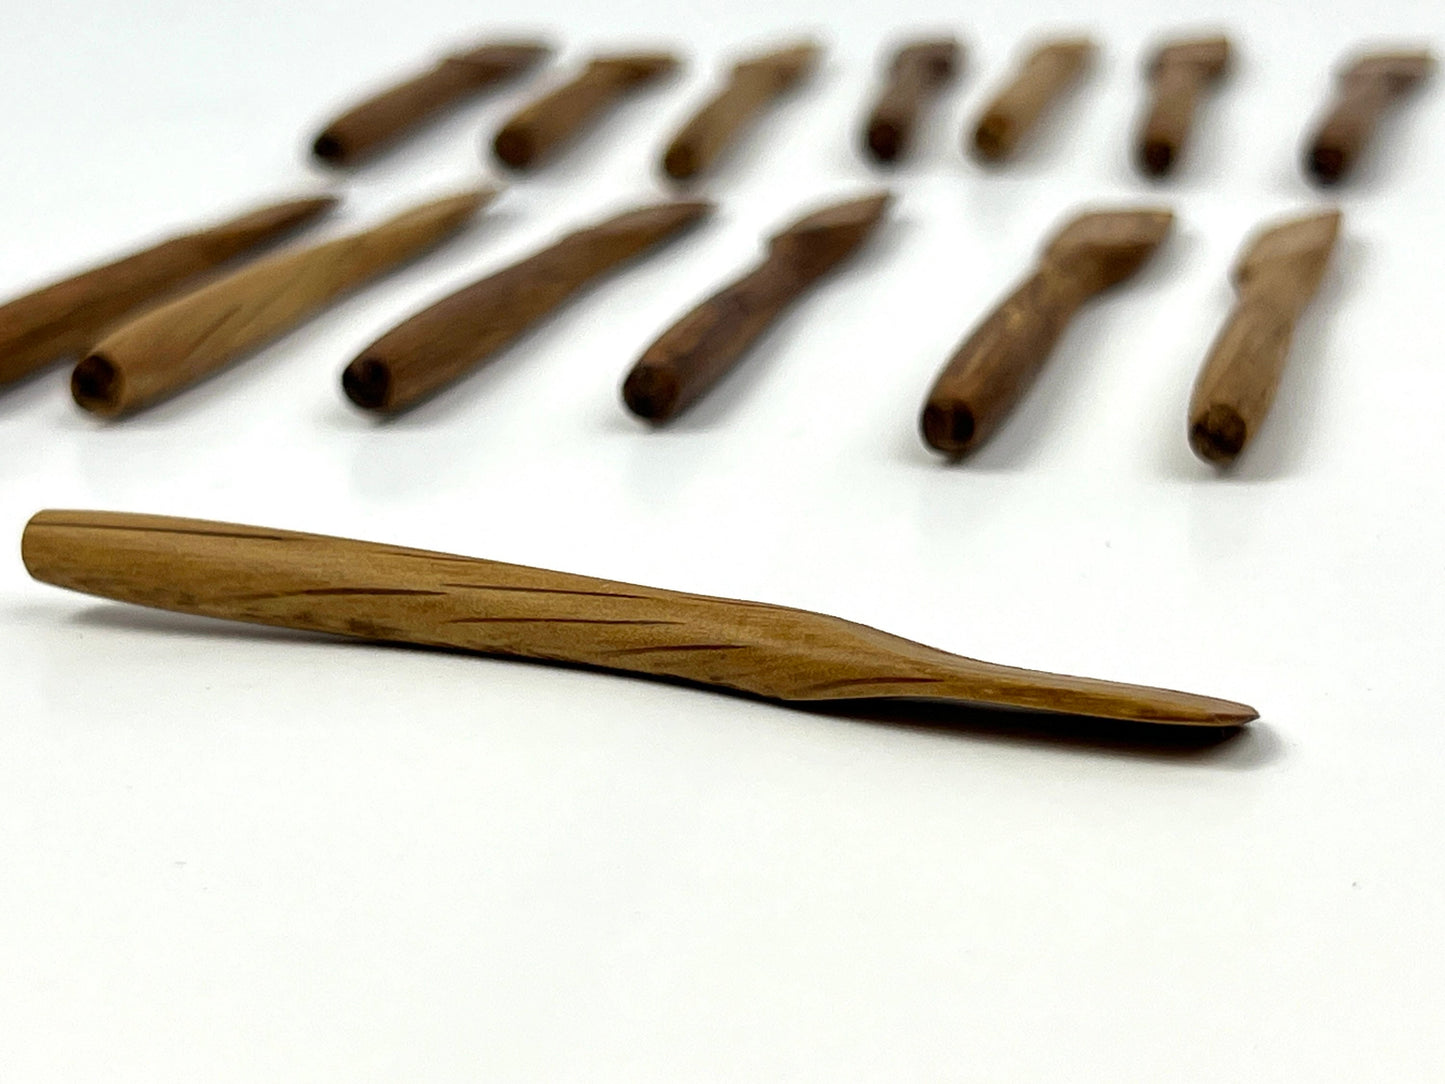 Small wooden cosmetics spatula applicator